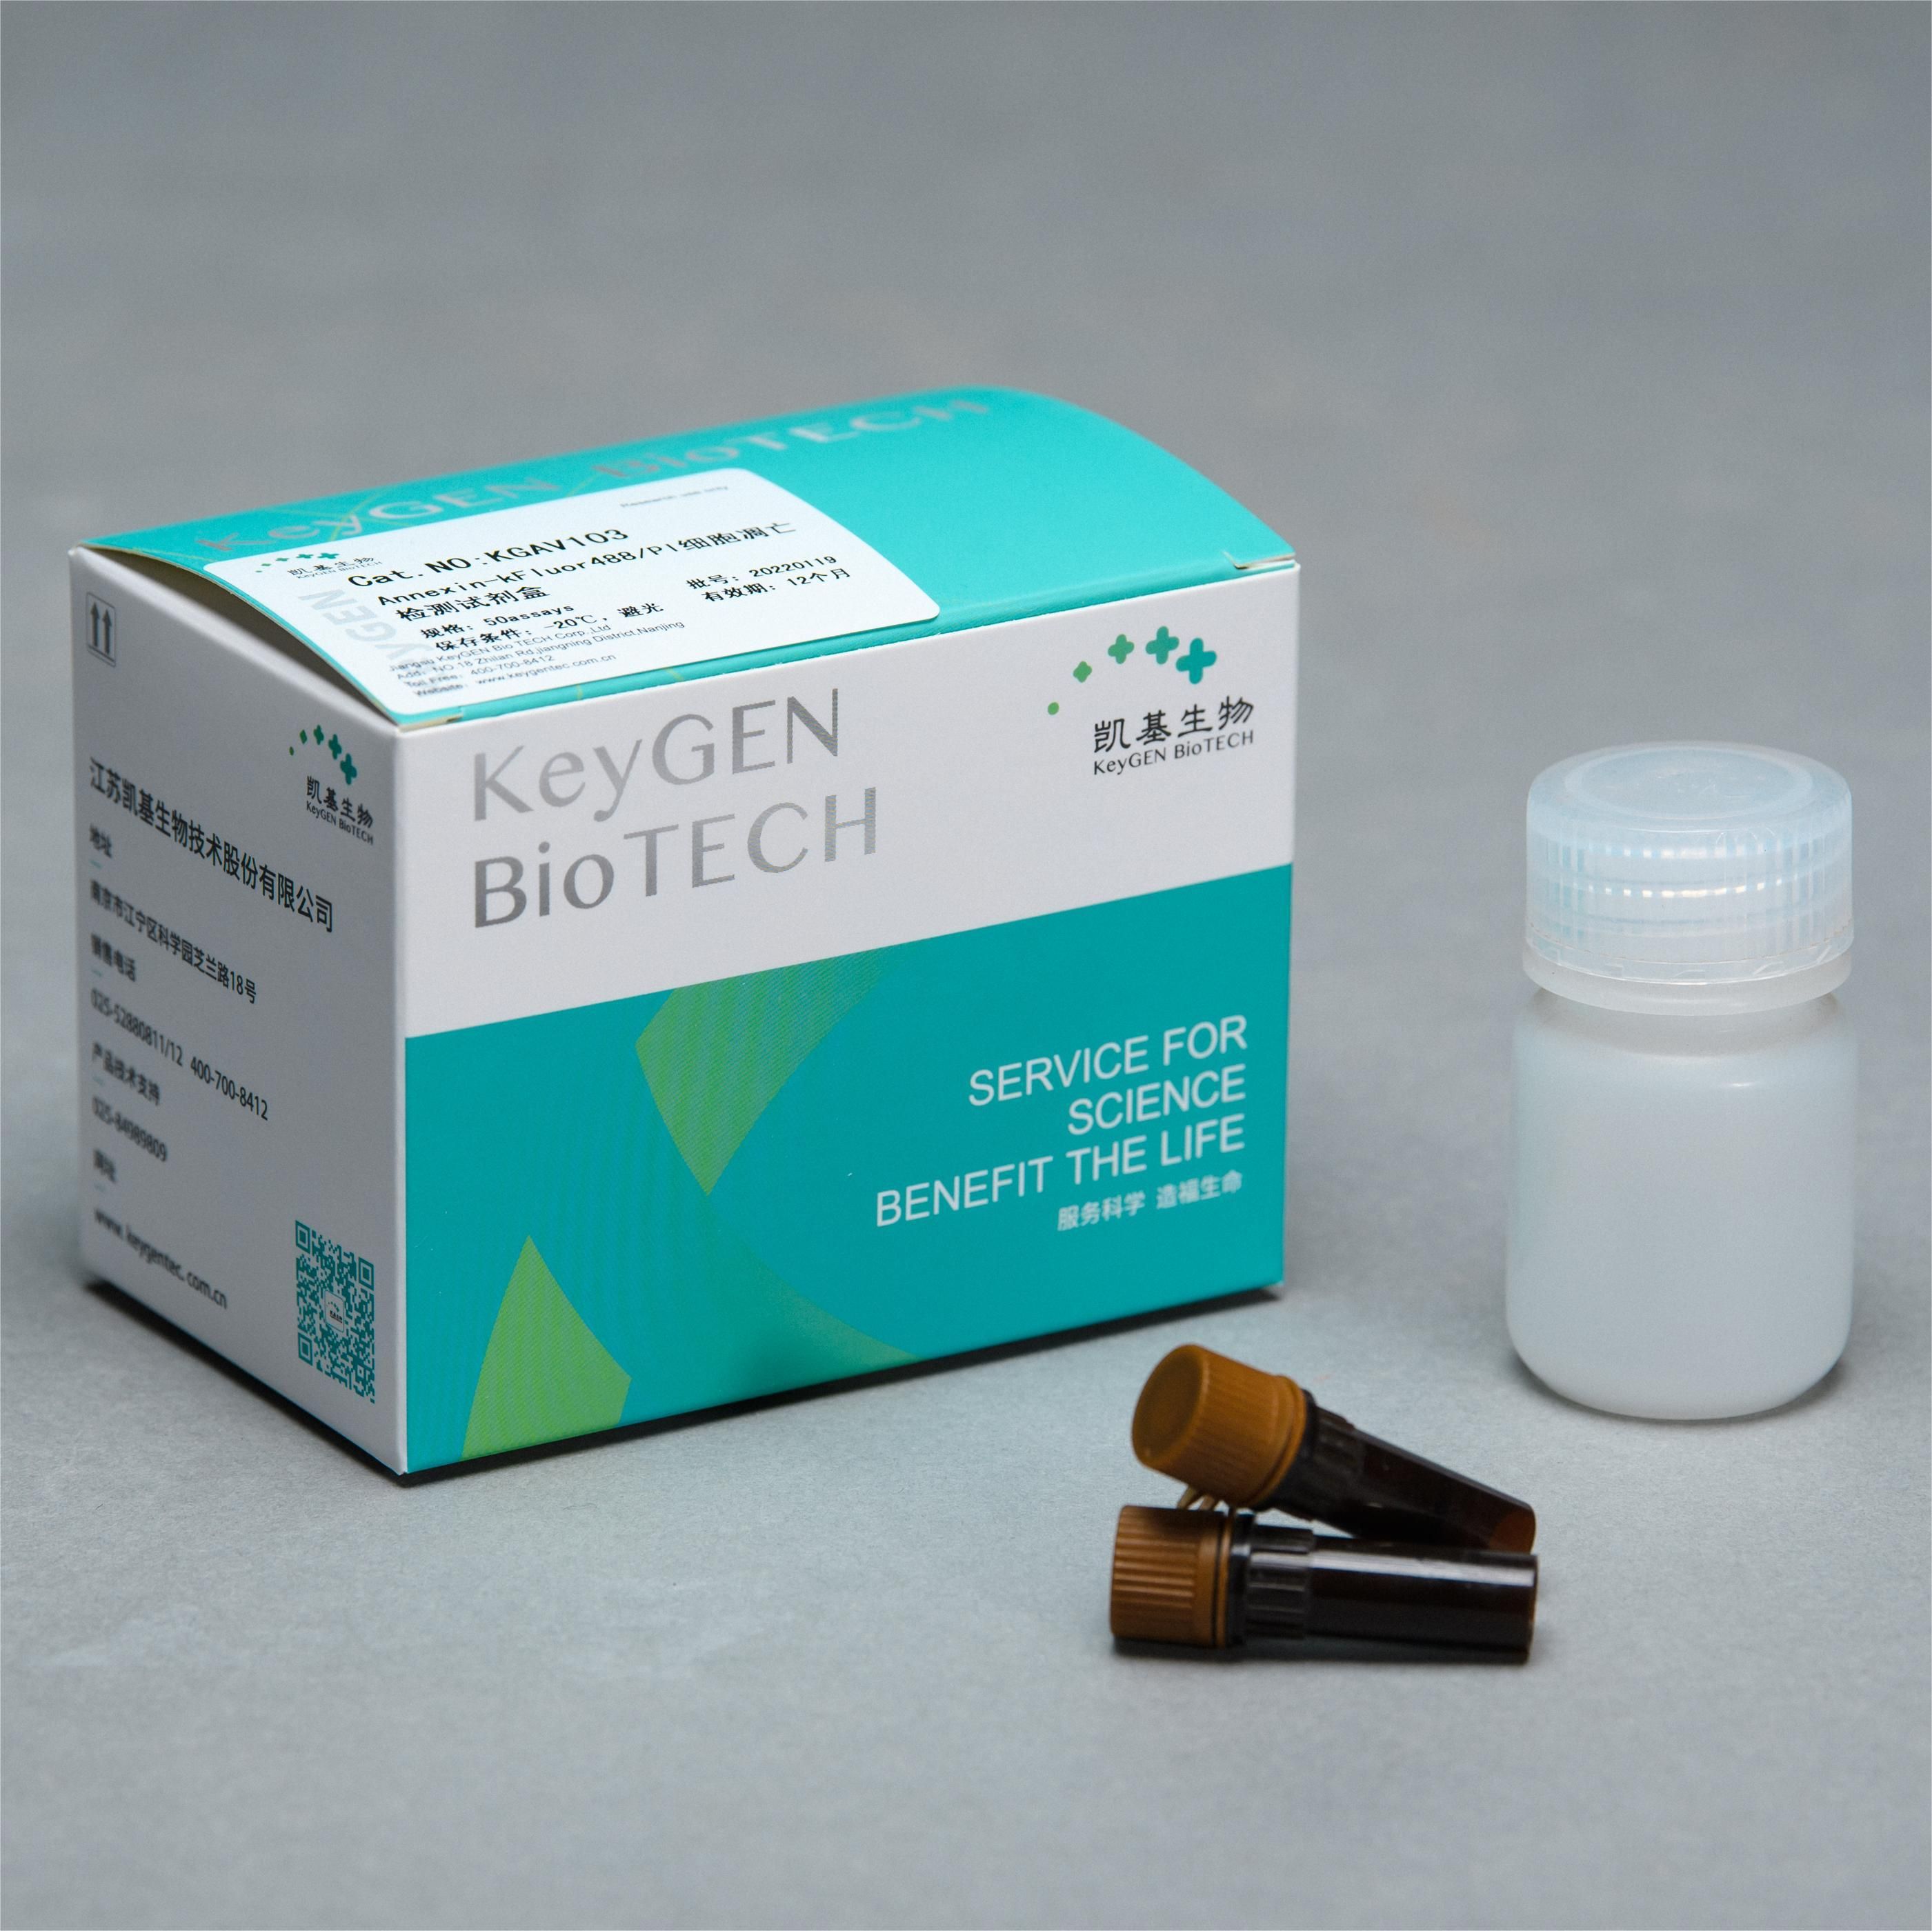 Annexin V-kFluor488/PI双染细胞凋亡检测试剂盒